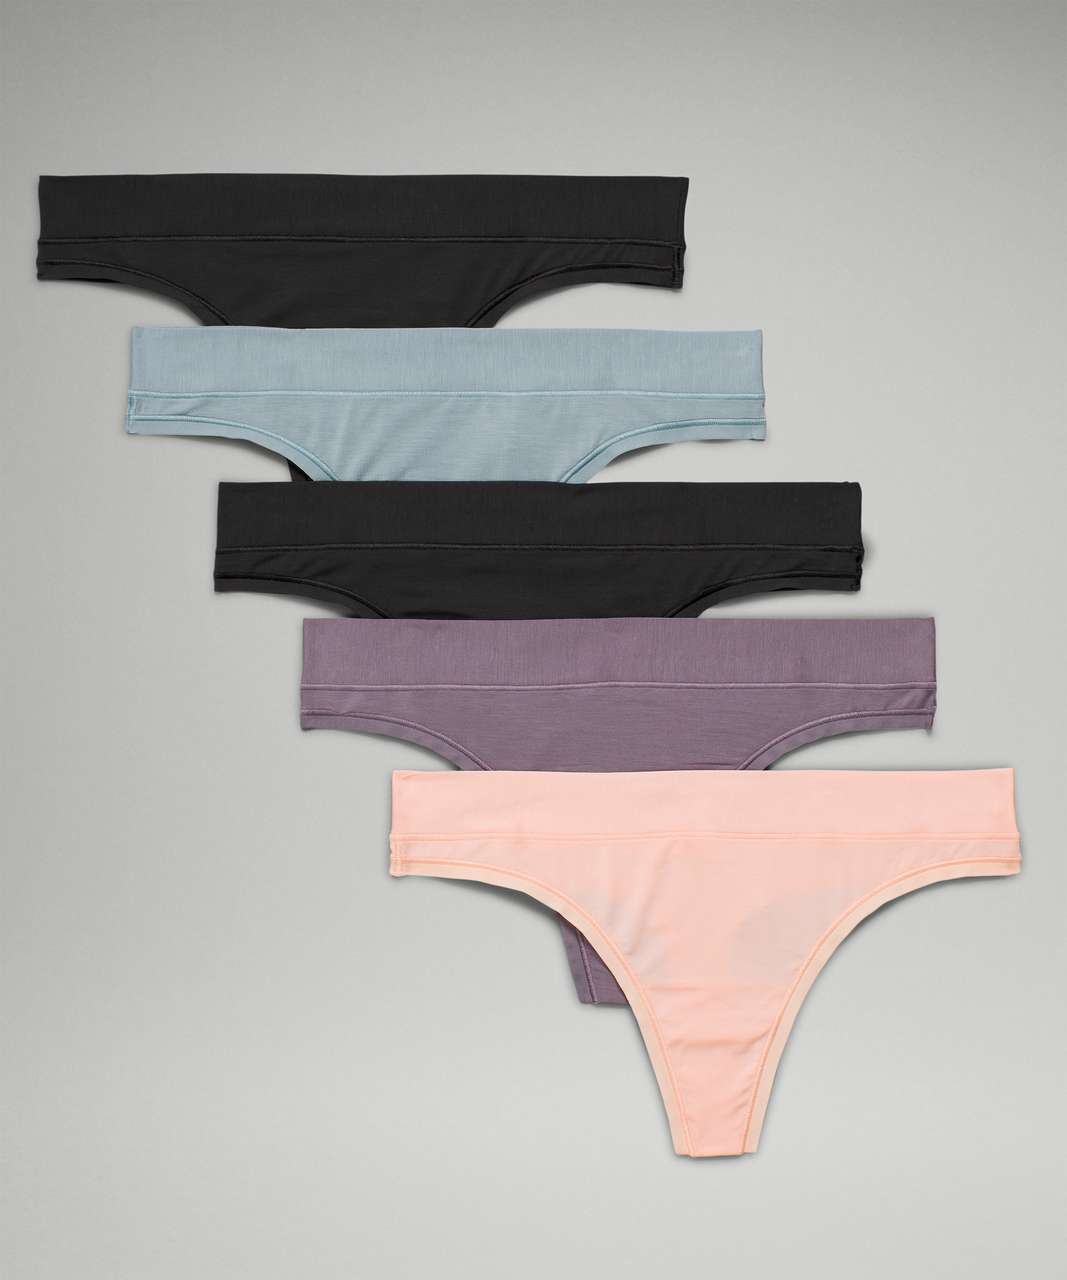 Lululemon UnderEase Mid Rise Thong Underwear *5 Pack - Black / Black / Dusky Lavender / Blue Cast / Pink Mist